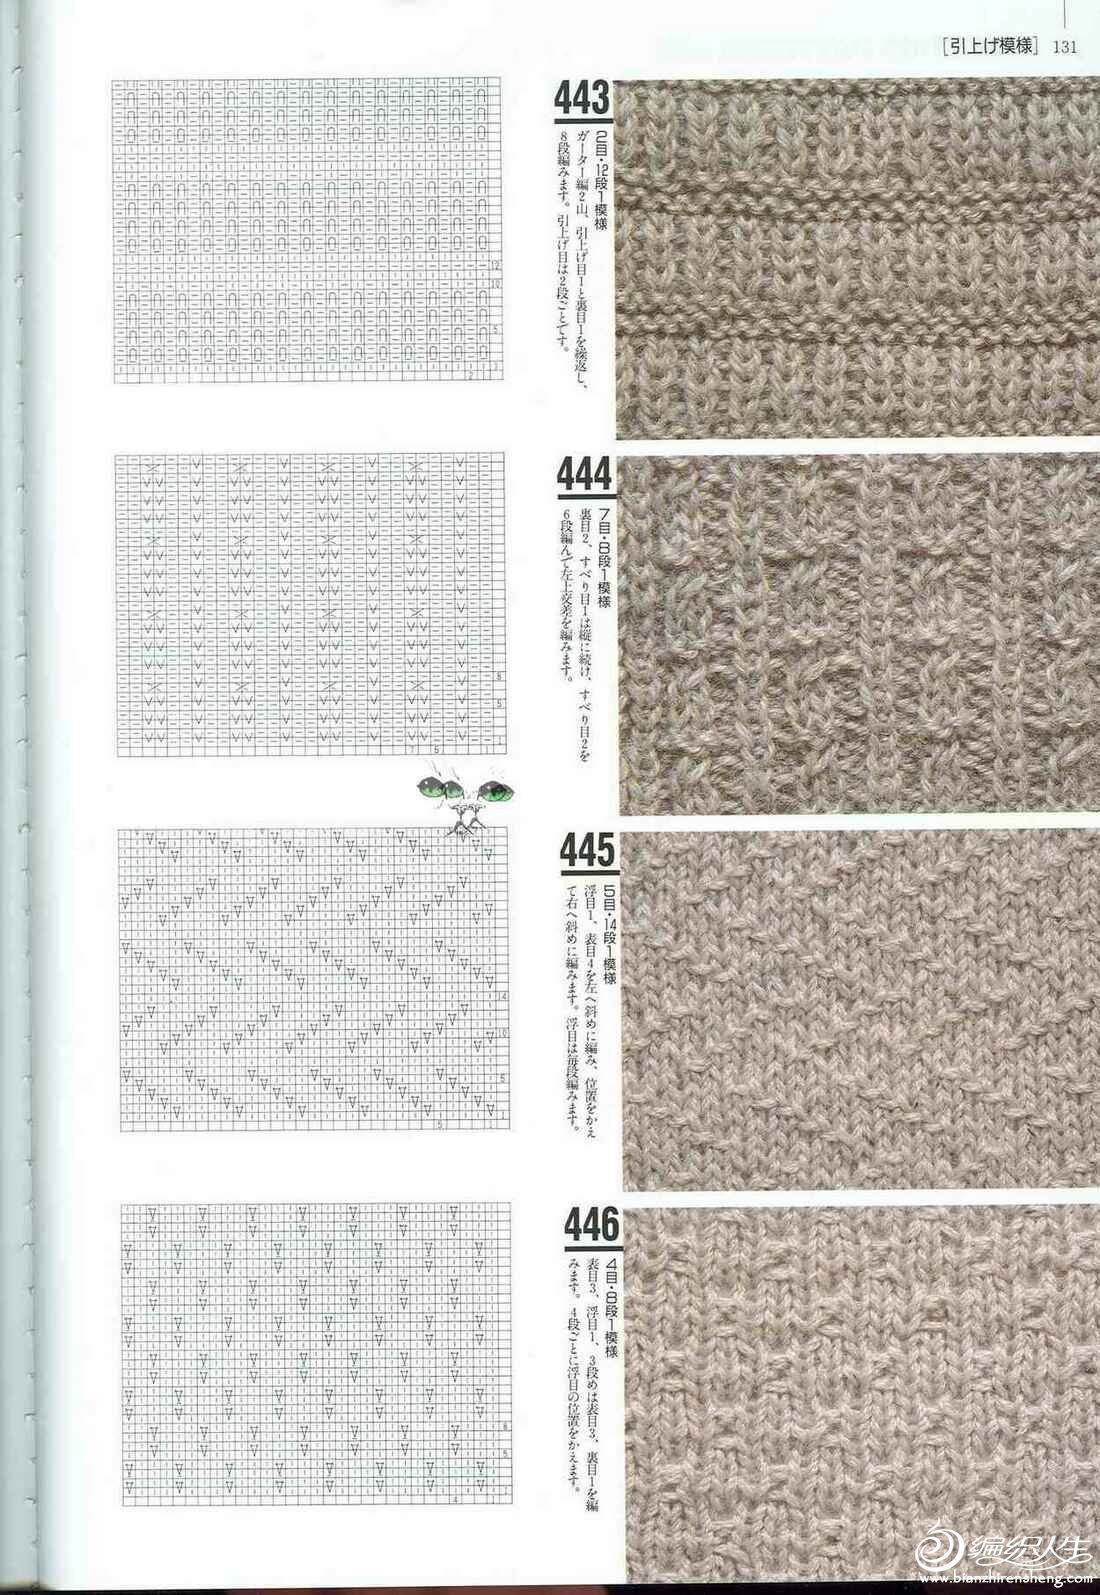 Knitting Patterns 500 128.jpg